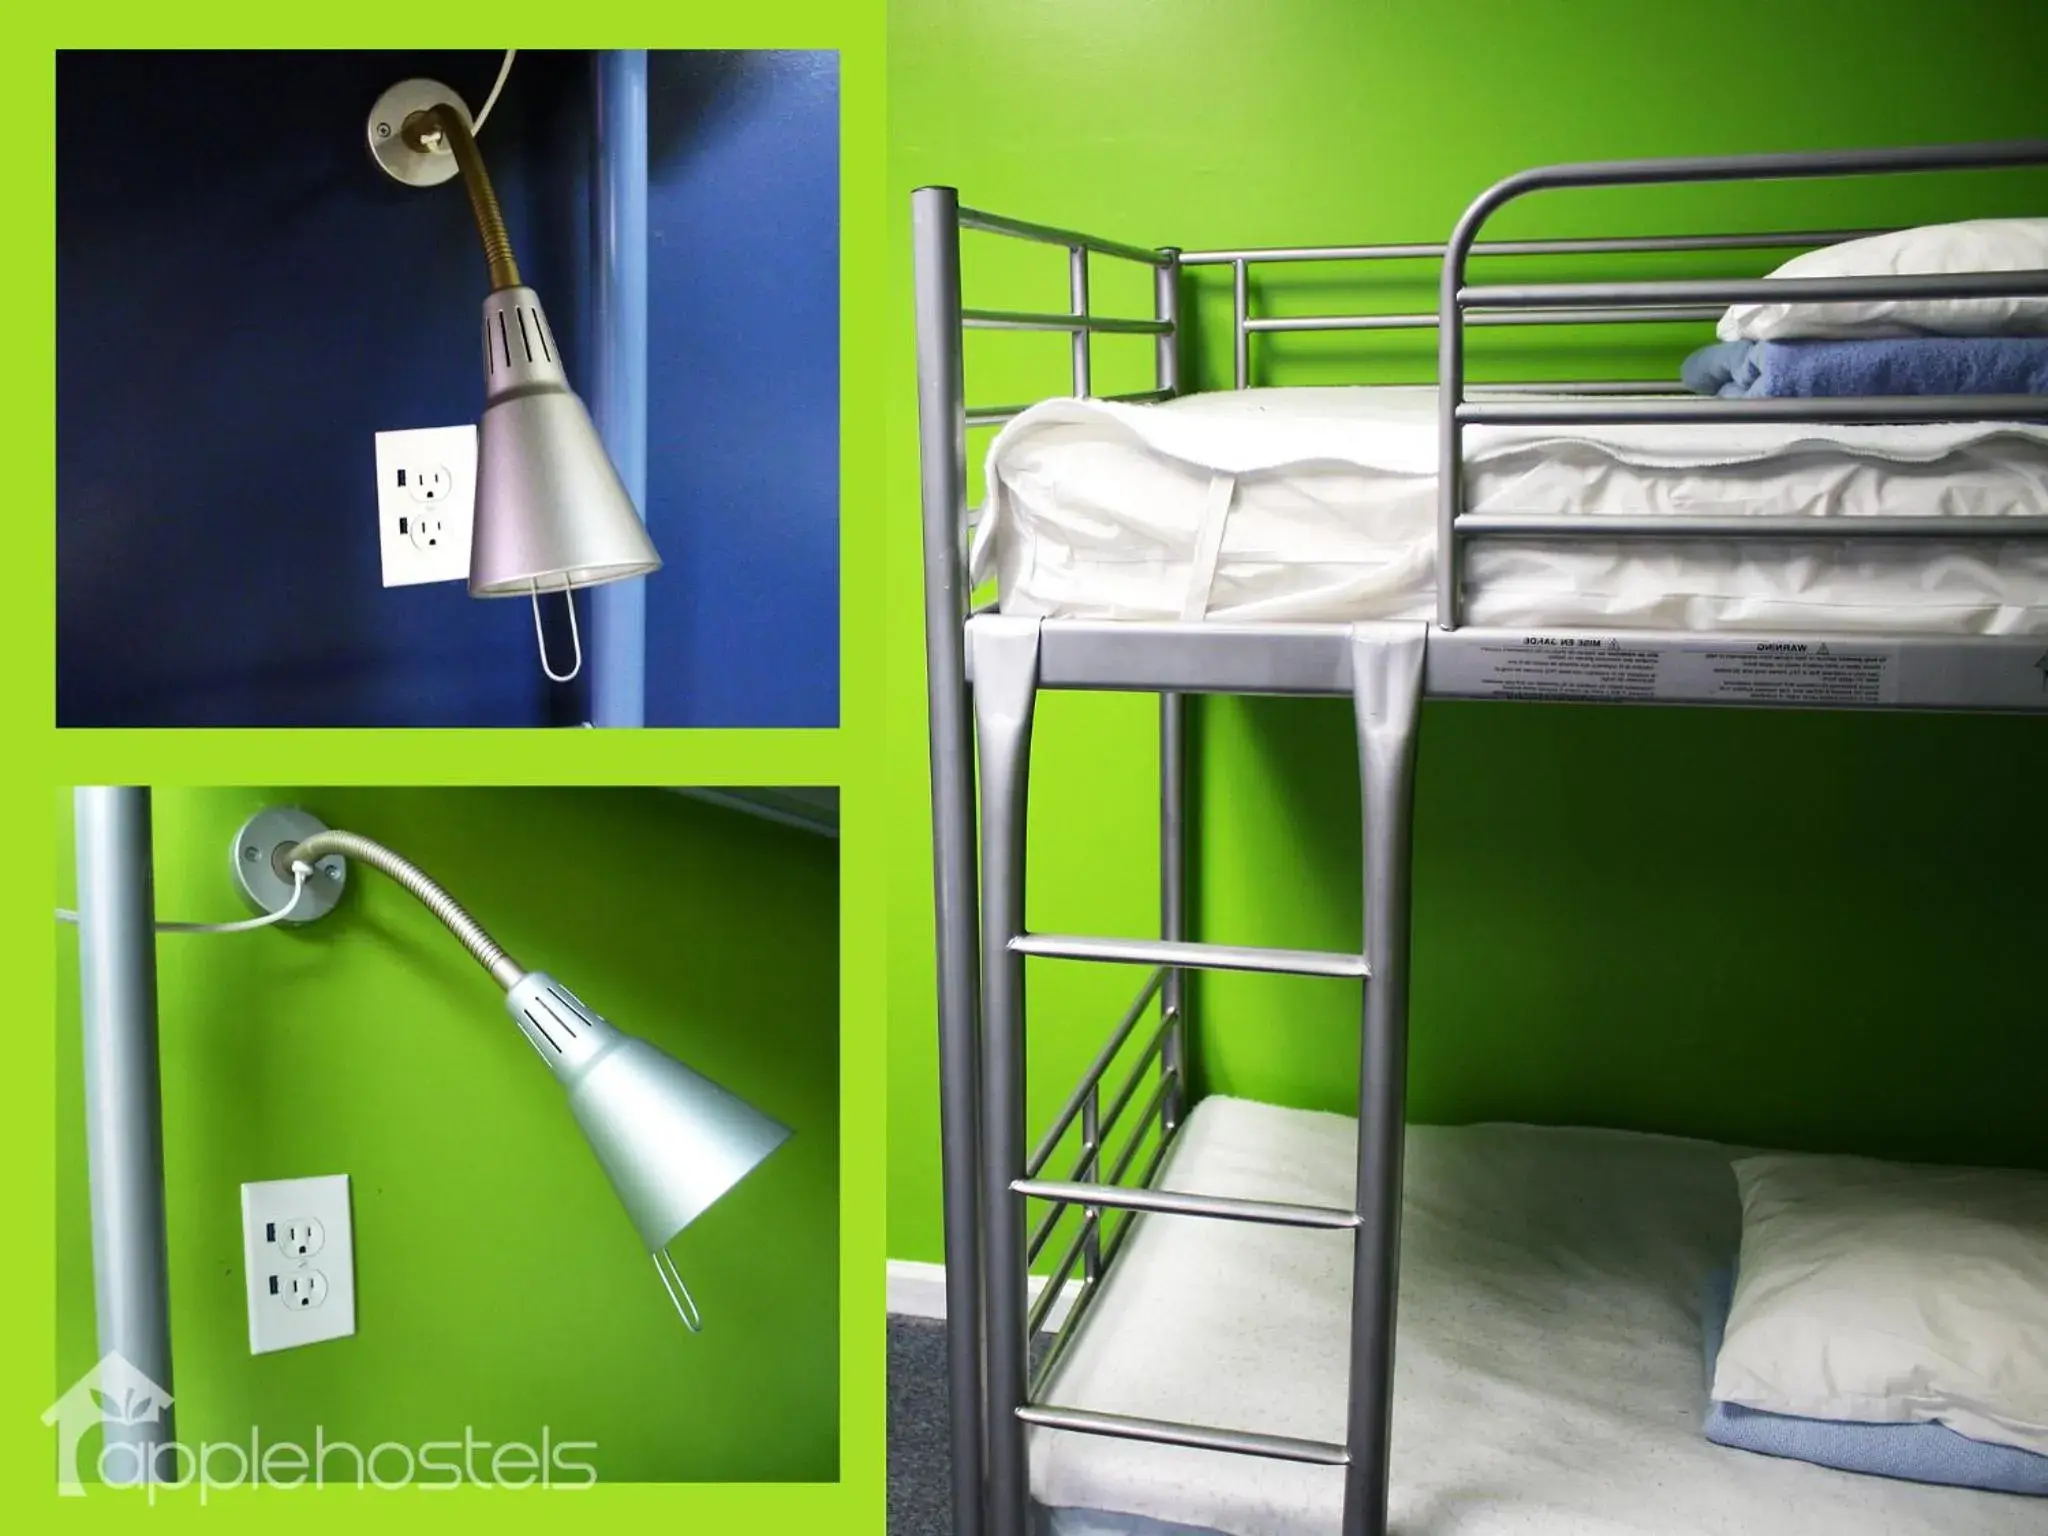 Bed in 10-Bed Male Dormitory Room in Apple Hostels of Philadelphia